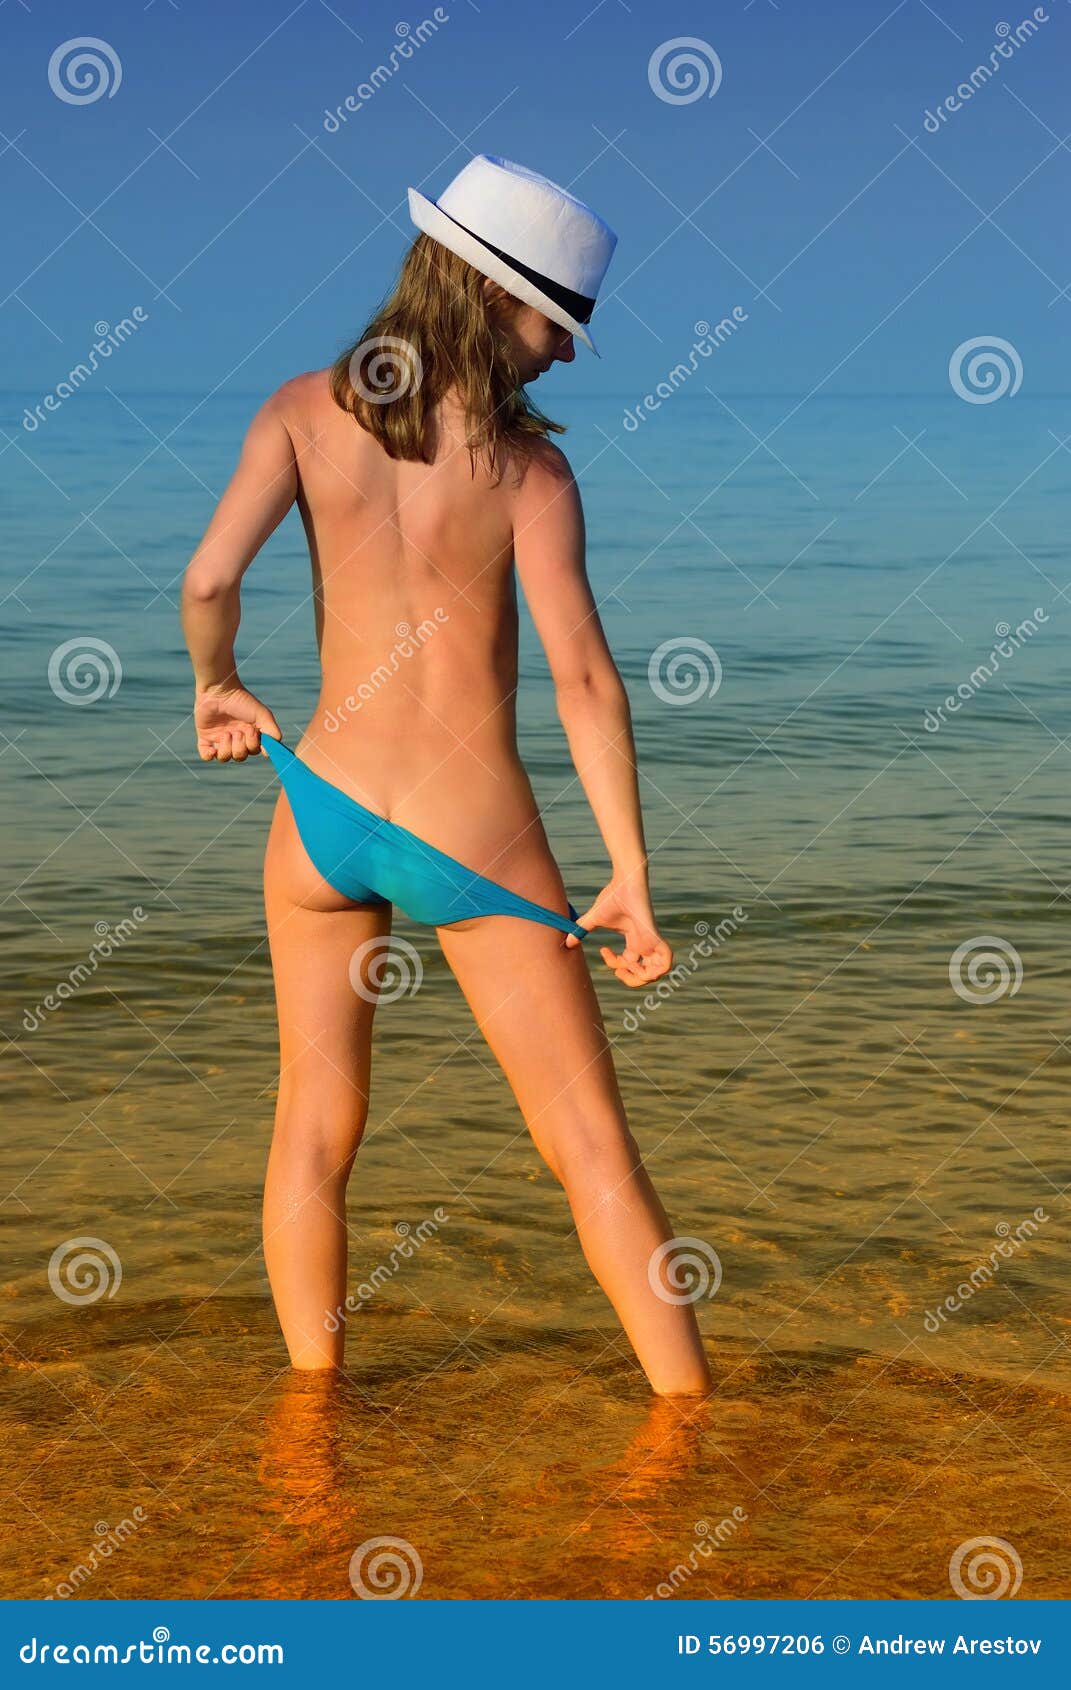 arnel nota share old women nude beach photos